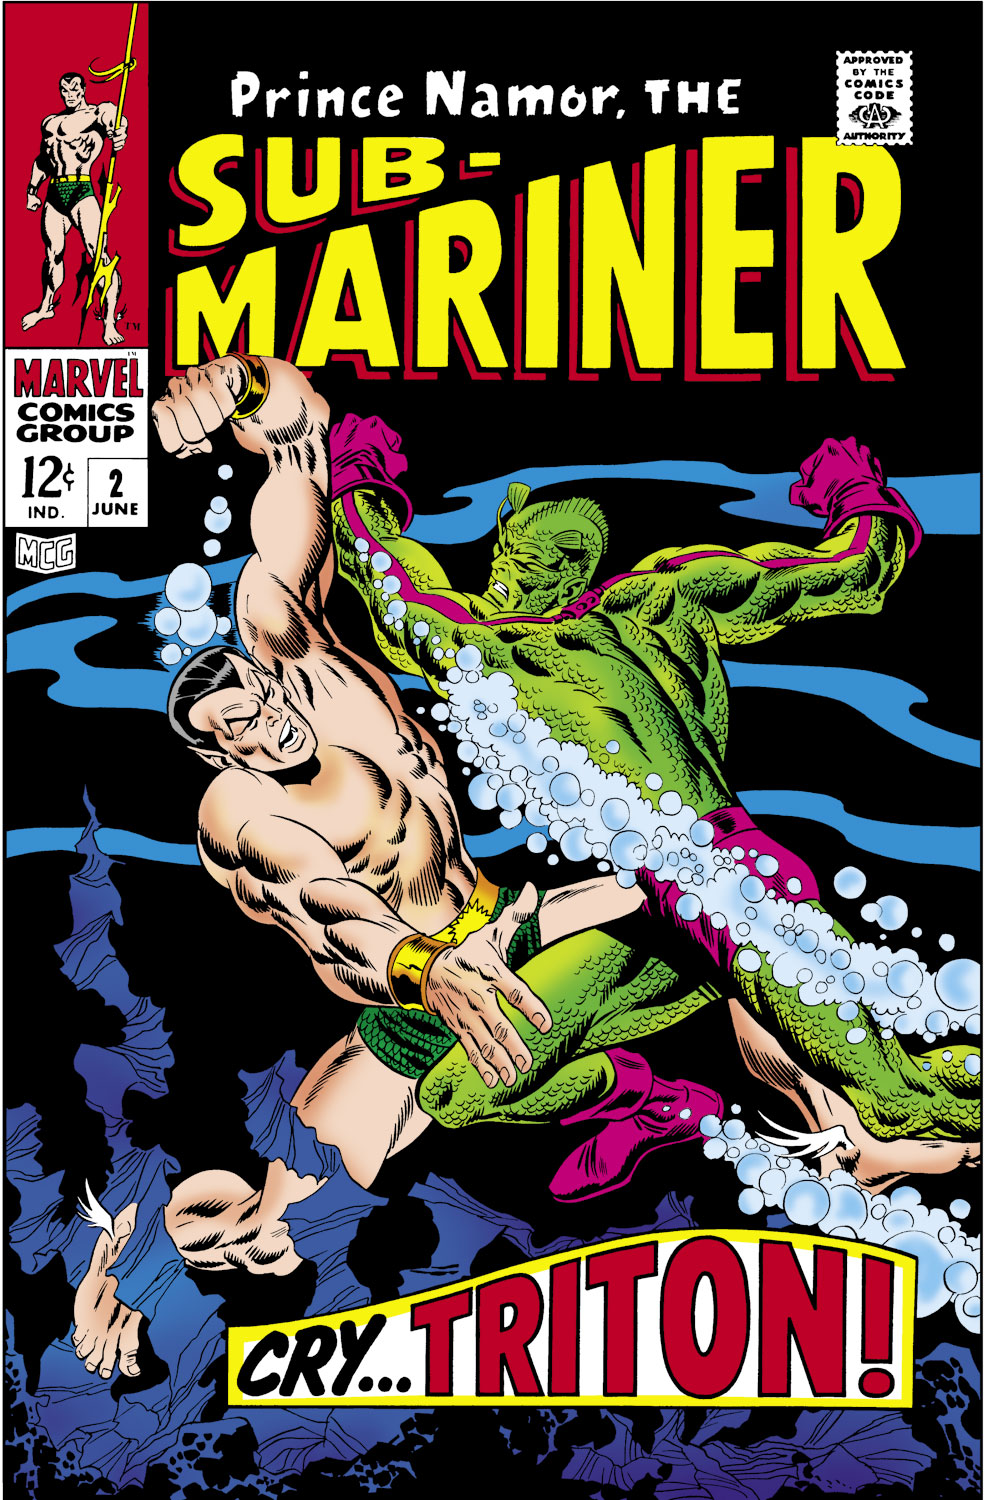 Sub-Mariner (1968) #2